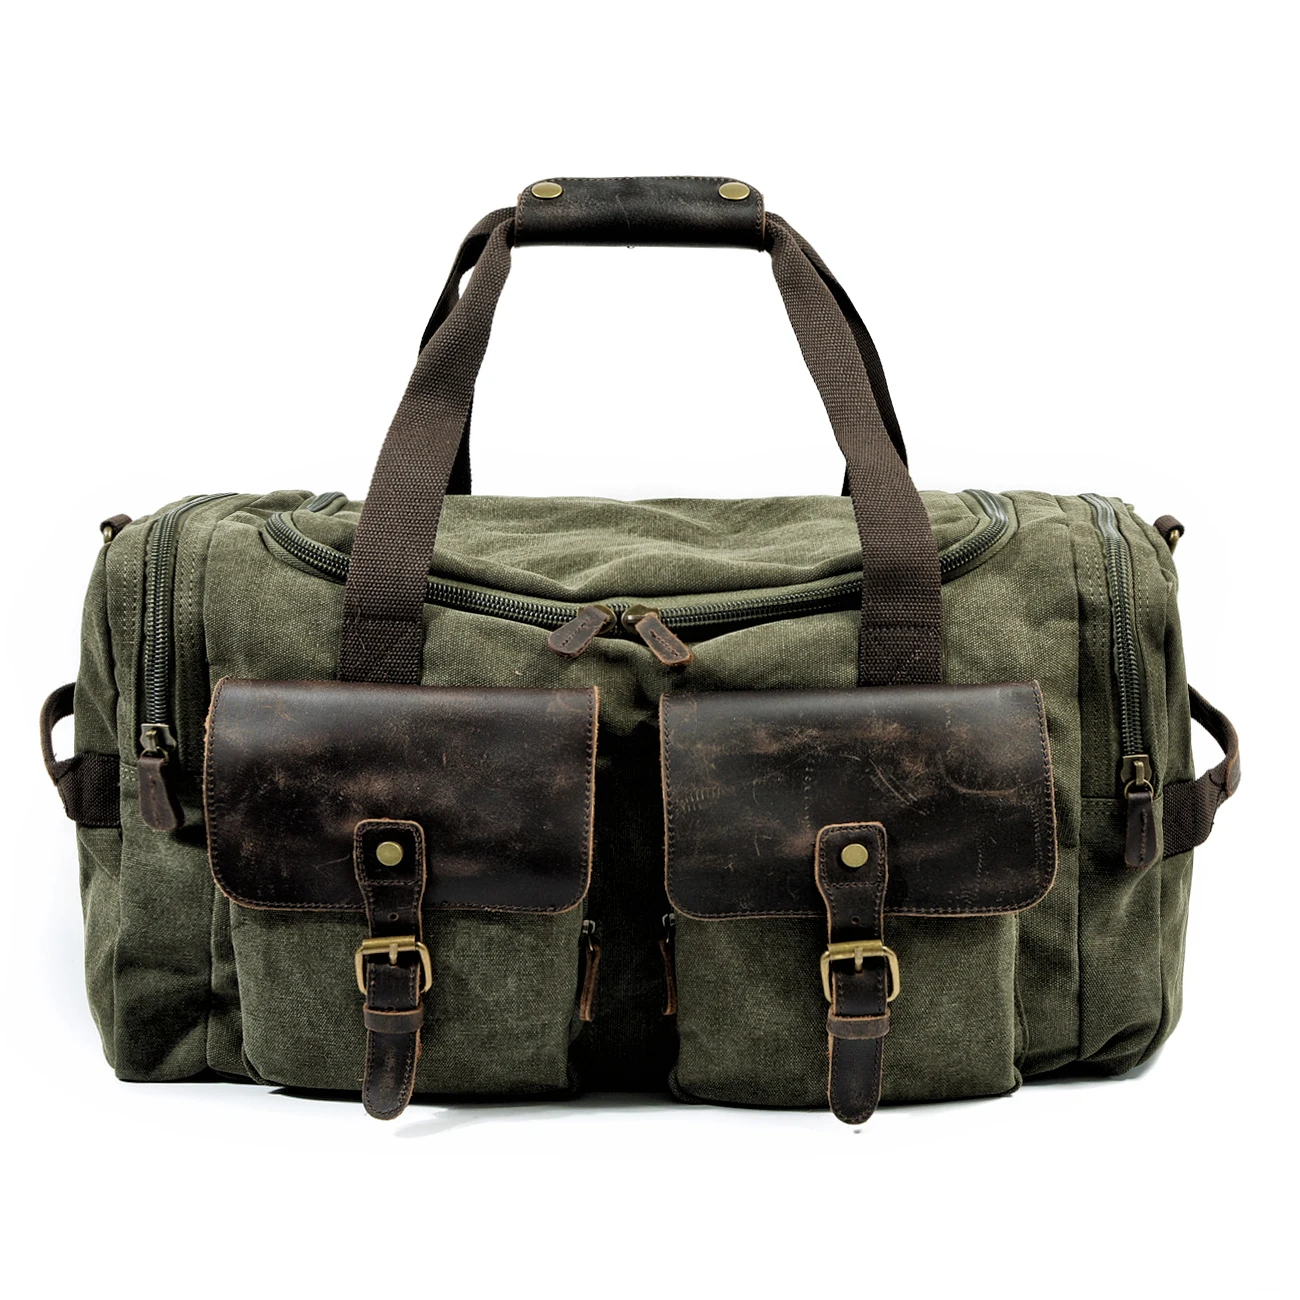 Retro travel bag European men's business travel handbag large-capacity travel sports fitness bag shoulder messenger bag